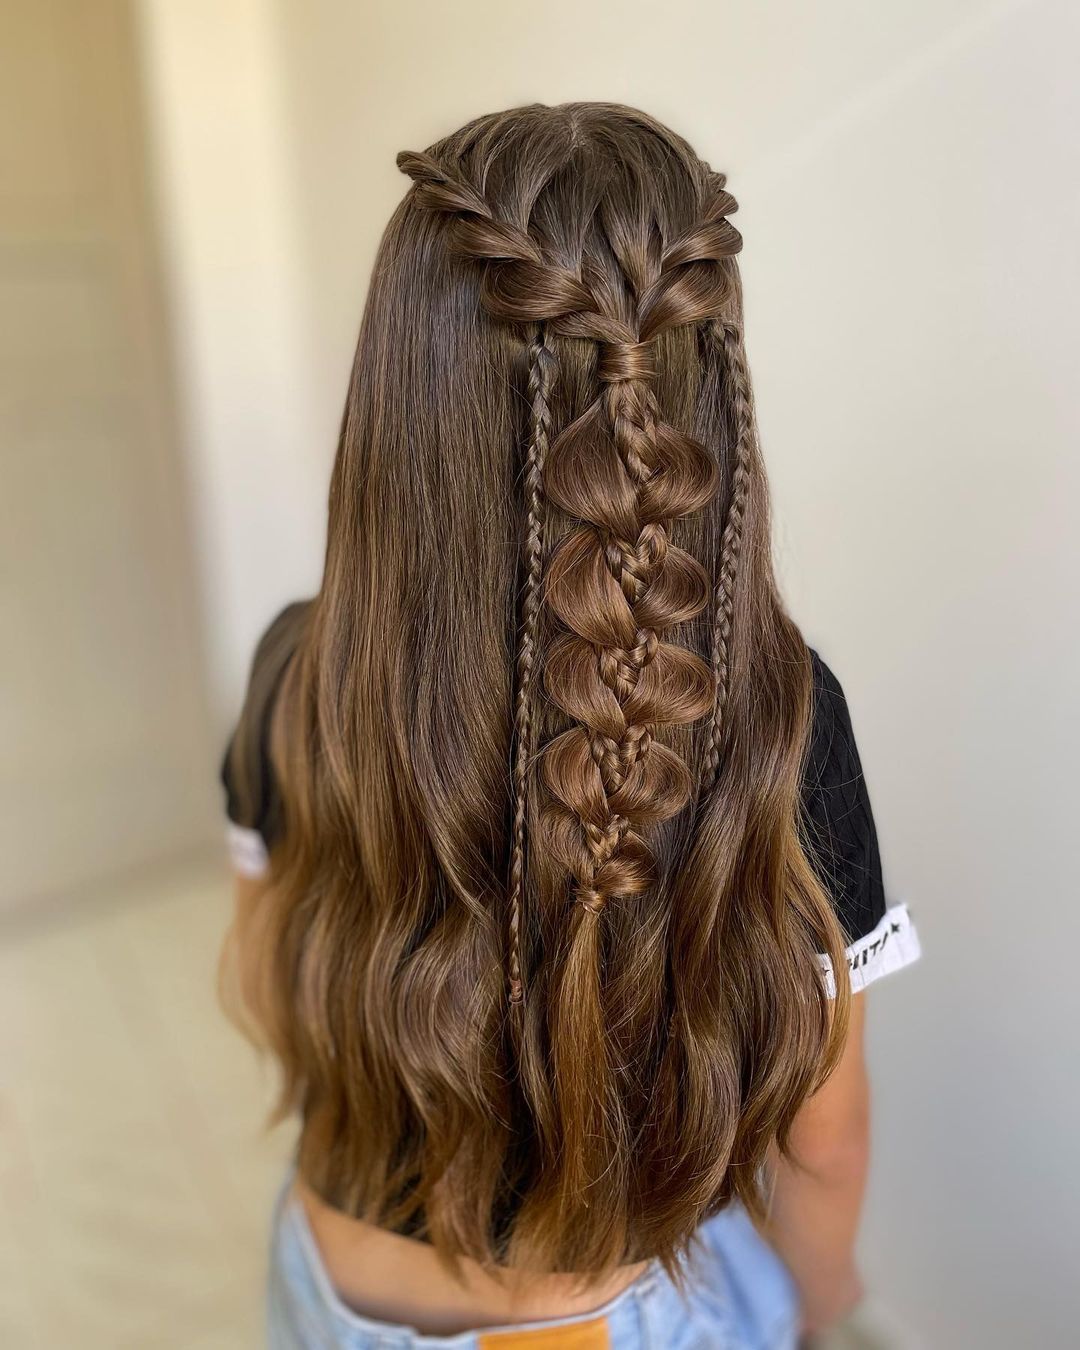 long braided down hairstyle via penteadoscintiareis